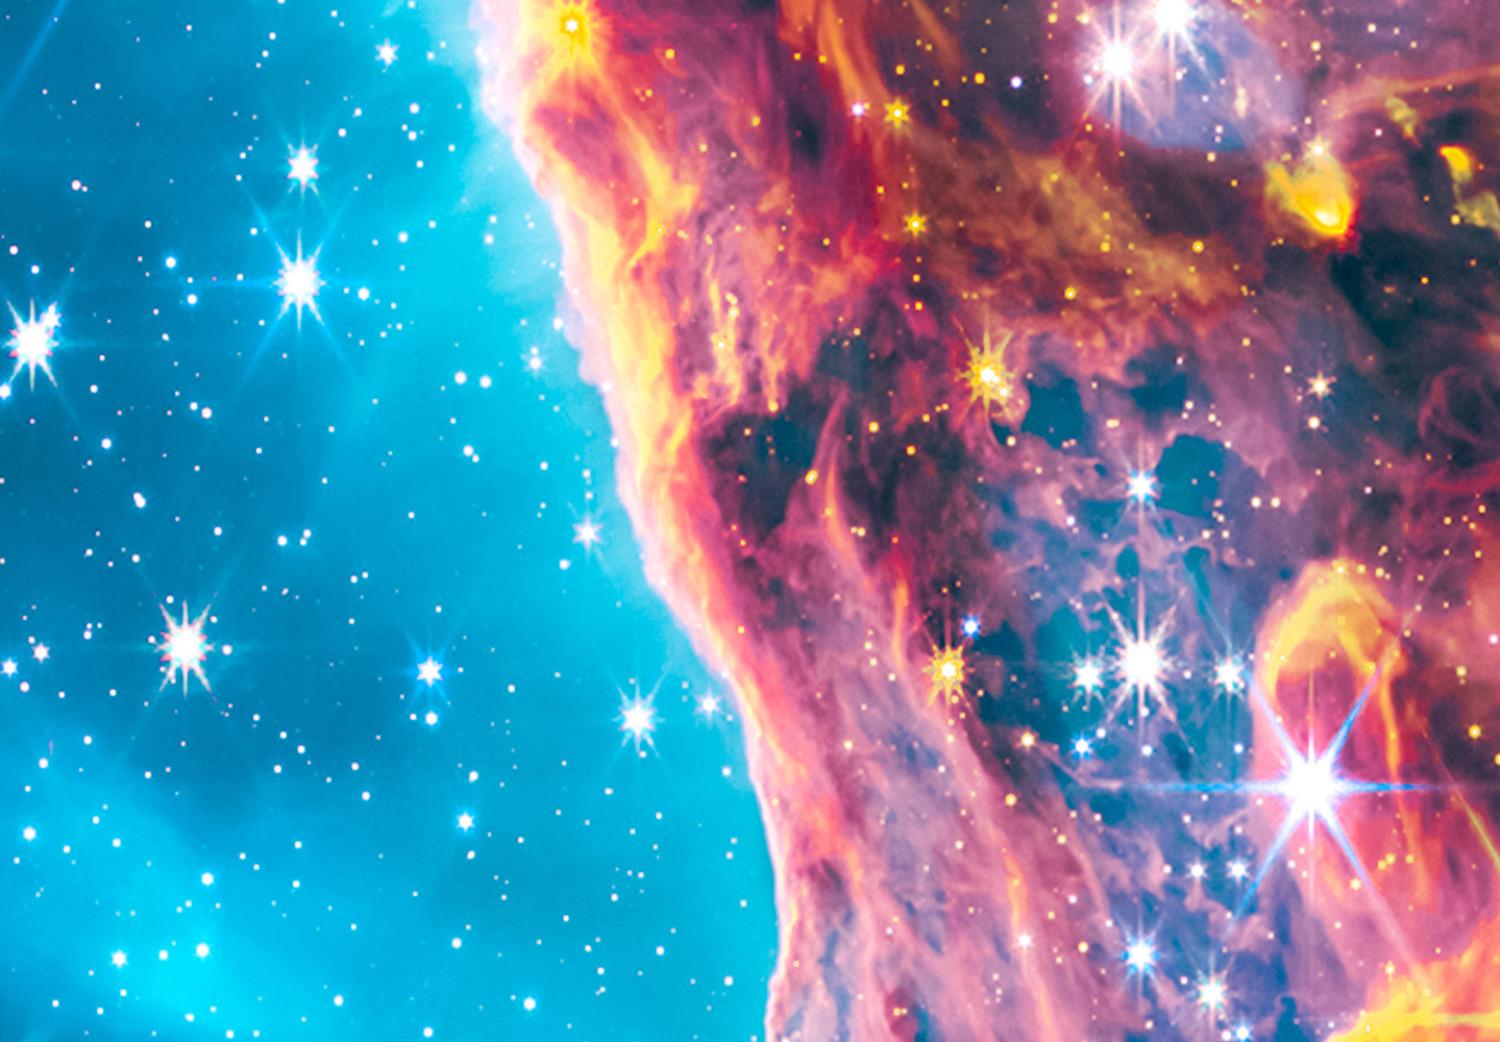 Cuadro moderno Carina Nebula - View of the Cosmos From Jamess Webb’s Telescope